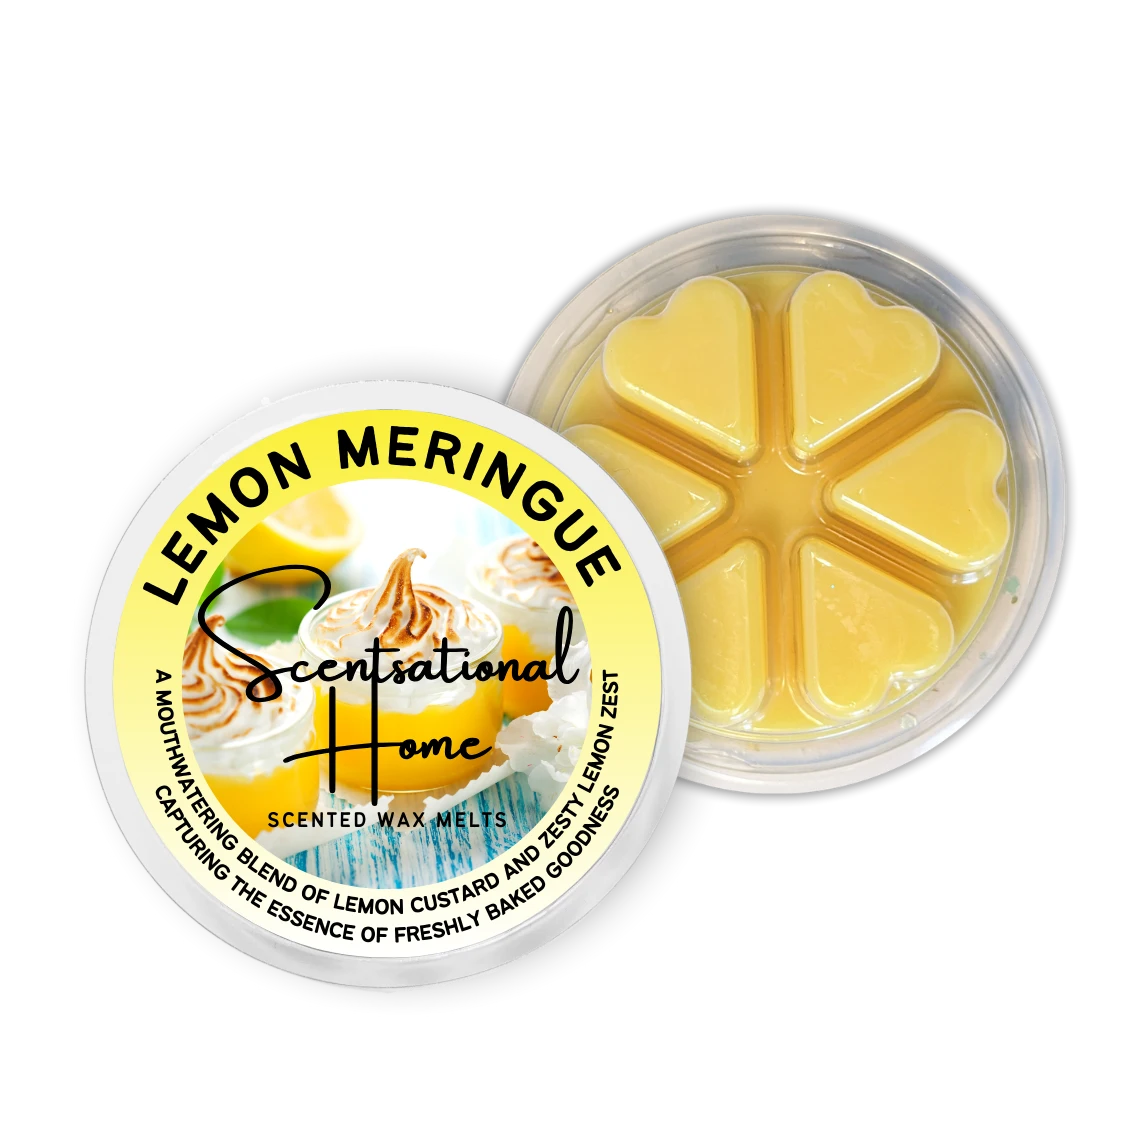 Lemon Meringue Wax Melt